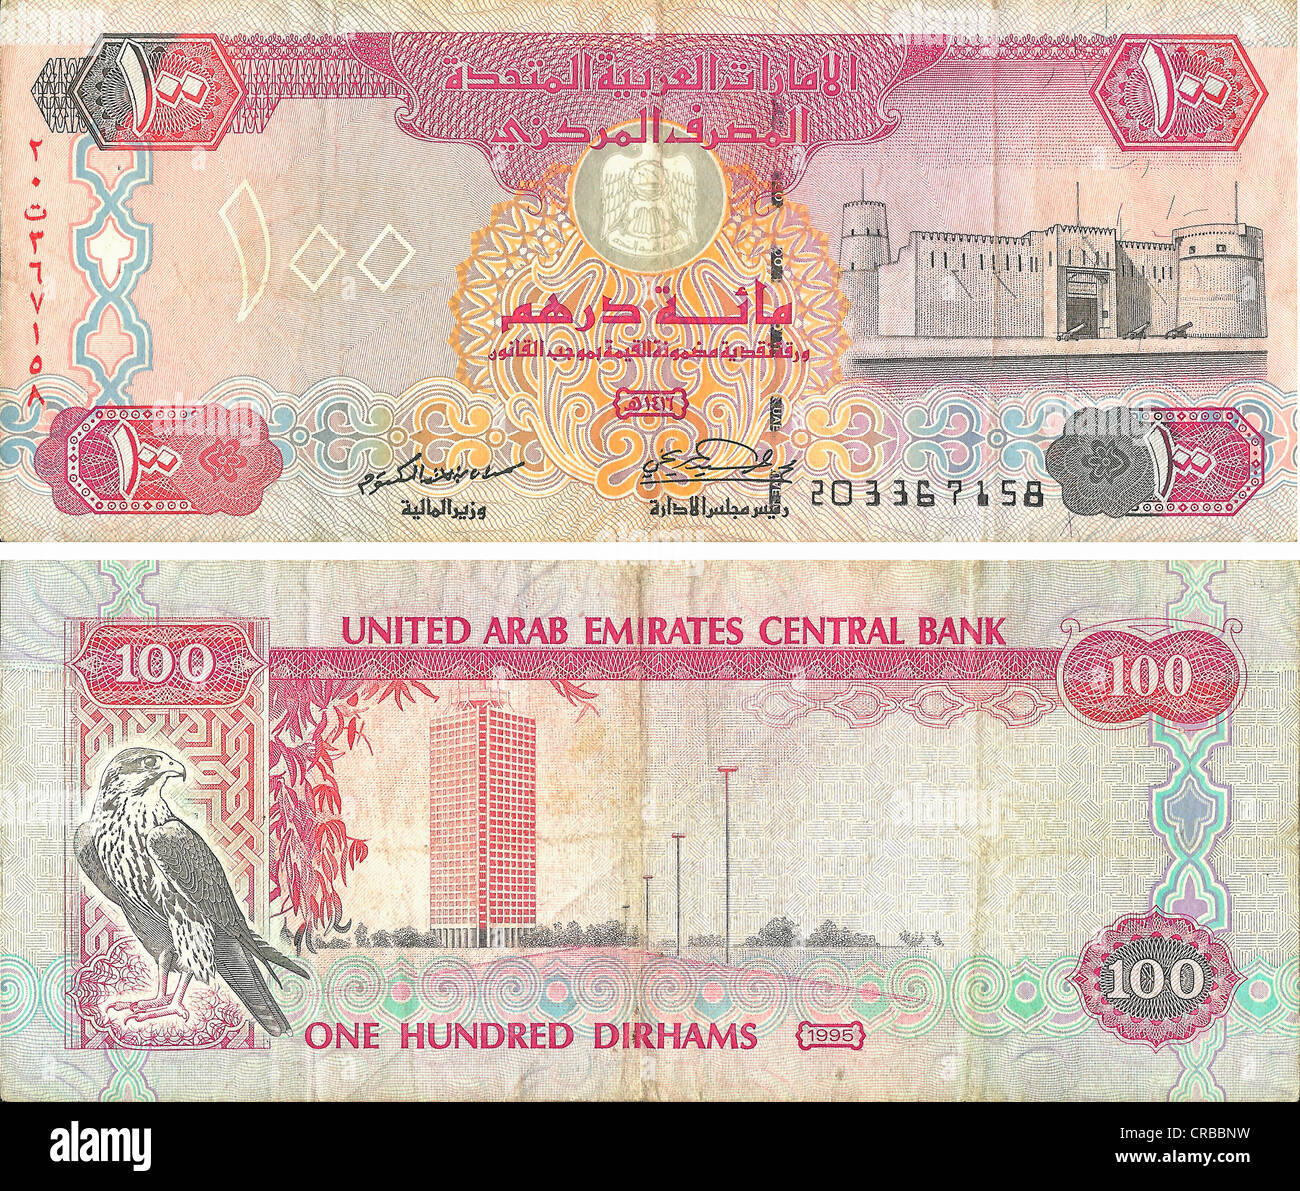 United arab Emirates Central Bank 100flow фото. United arab Emirates Central Bank 100flow фото цена в рублях. Dirhams перевод.